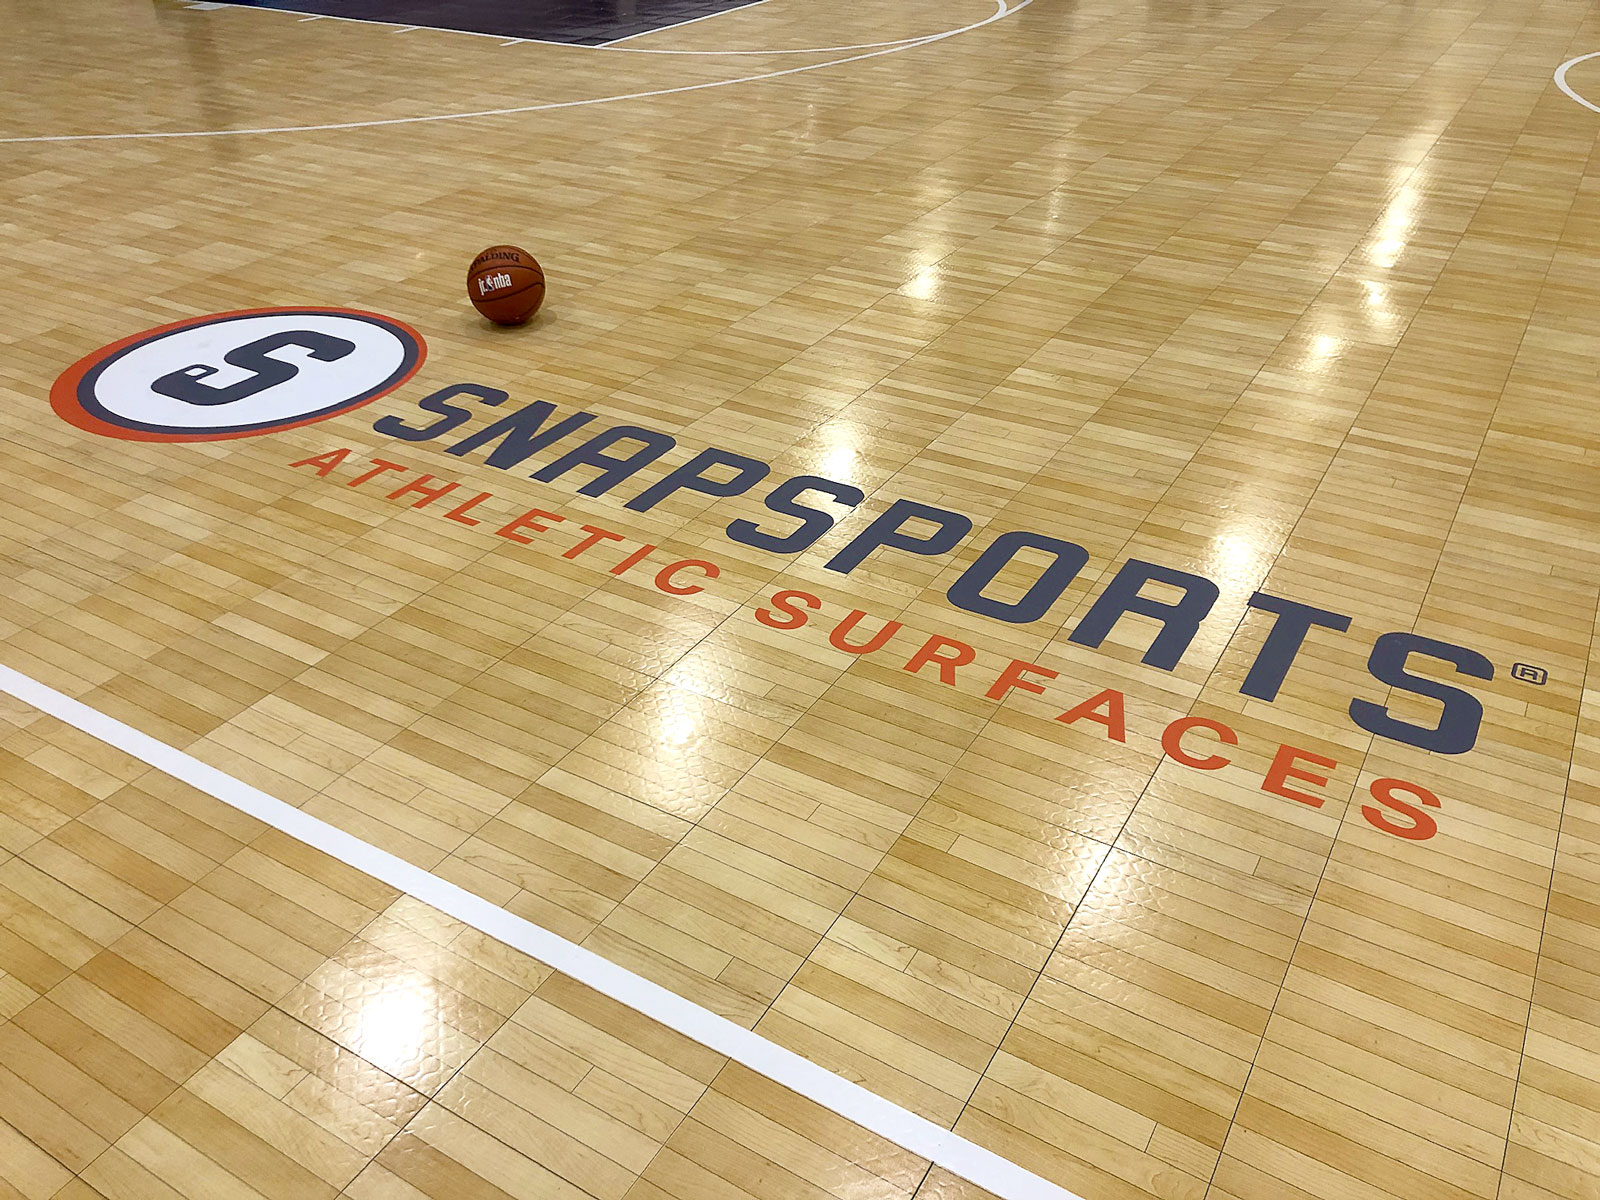 SnapSports Athletic Surfaces logo on the Maple TuffShield flooring